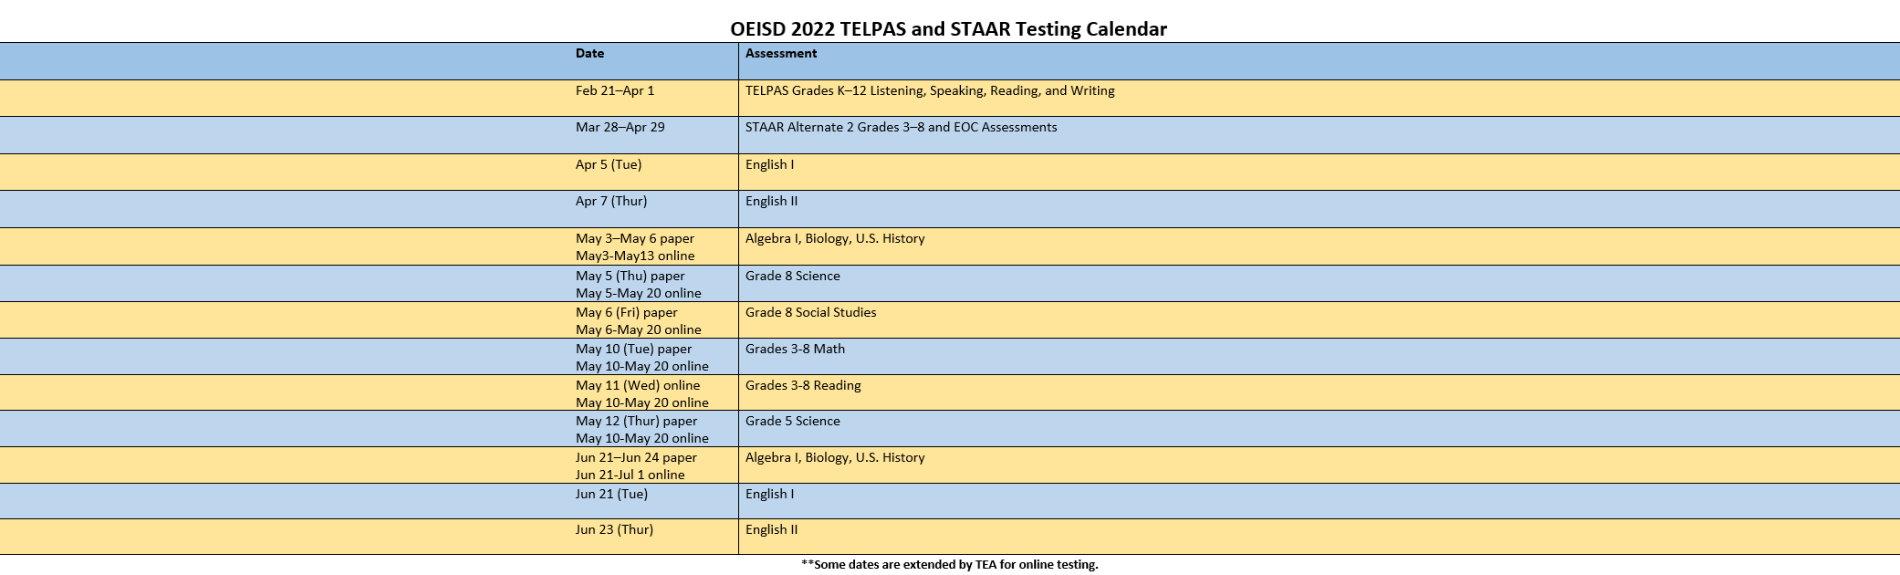 OEISD 2022 TELPAS and STAAR Testing Calendar